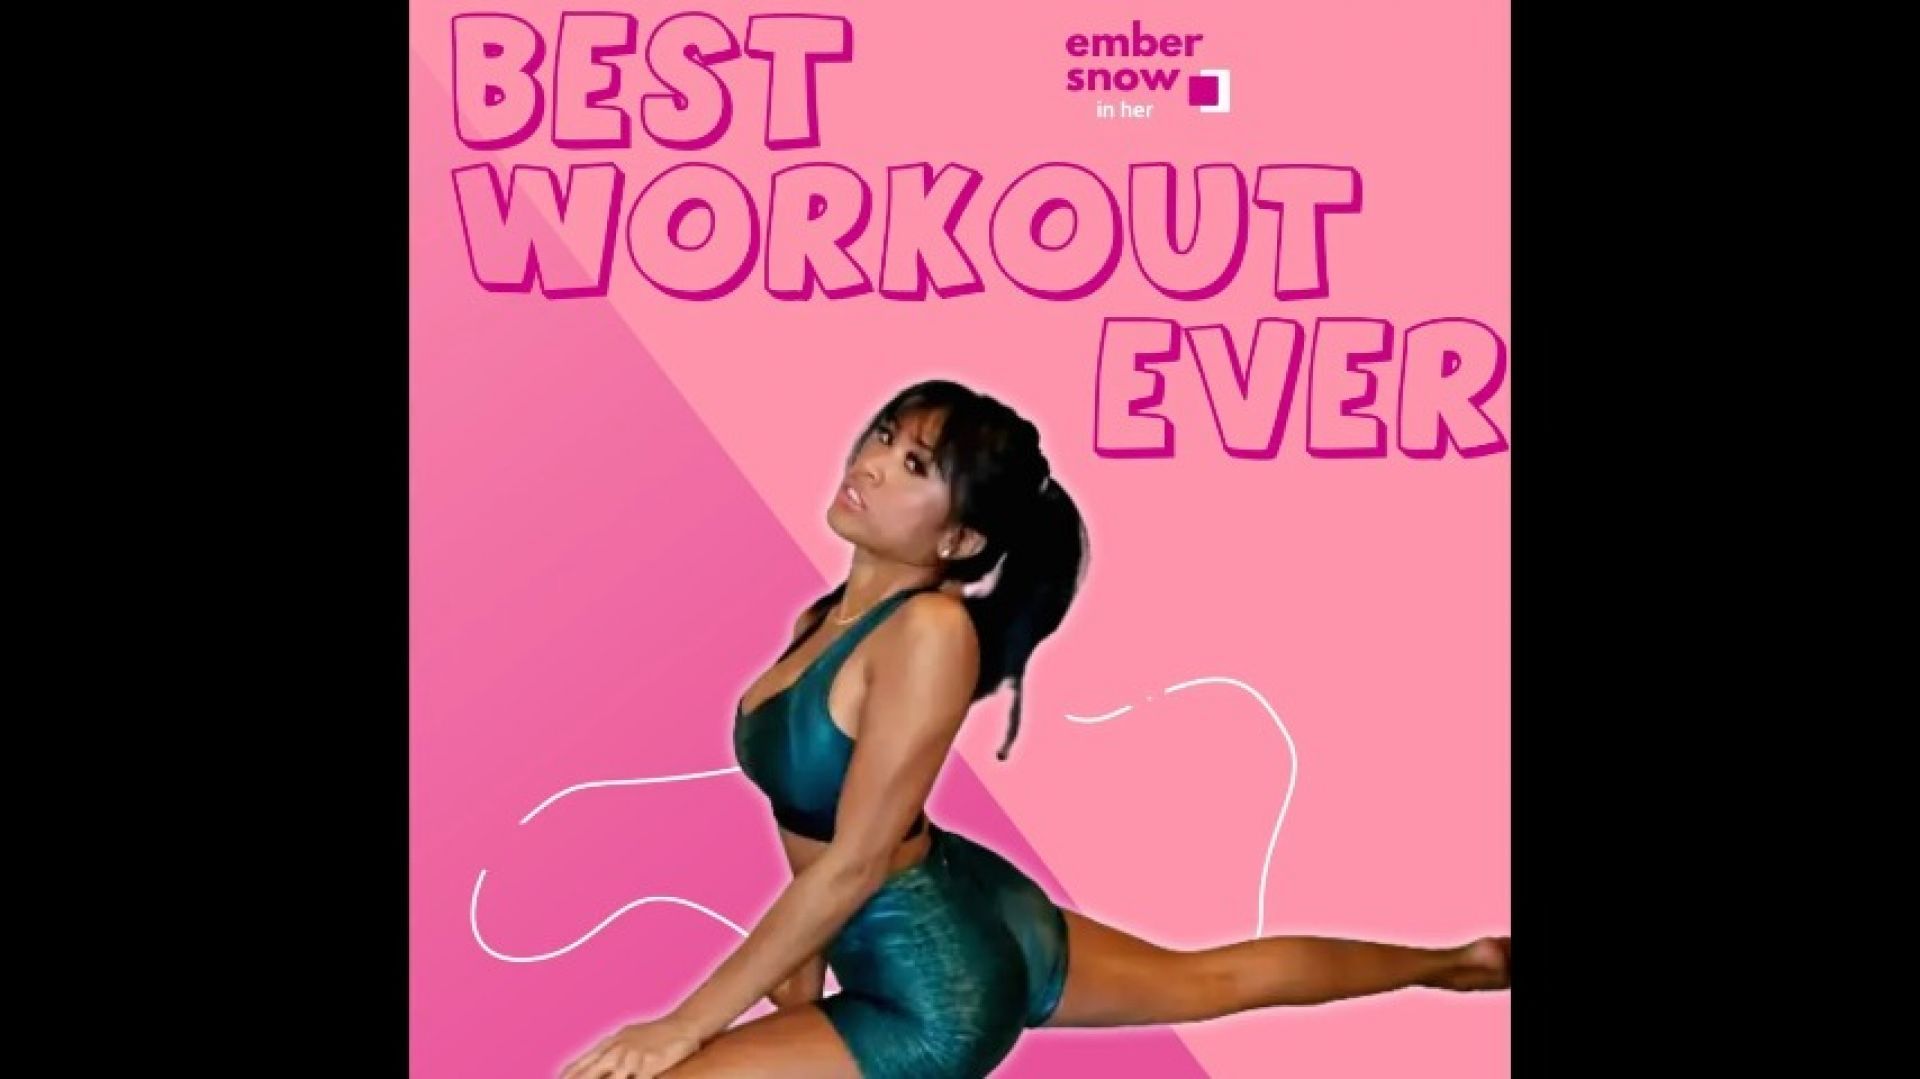 Ember Snow- Best Workout Ever